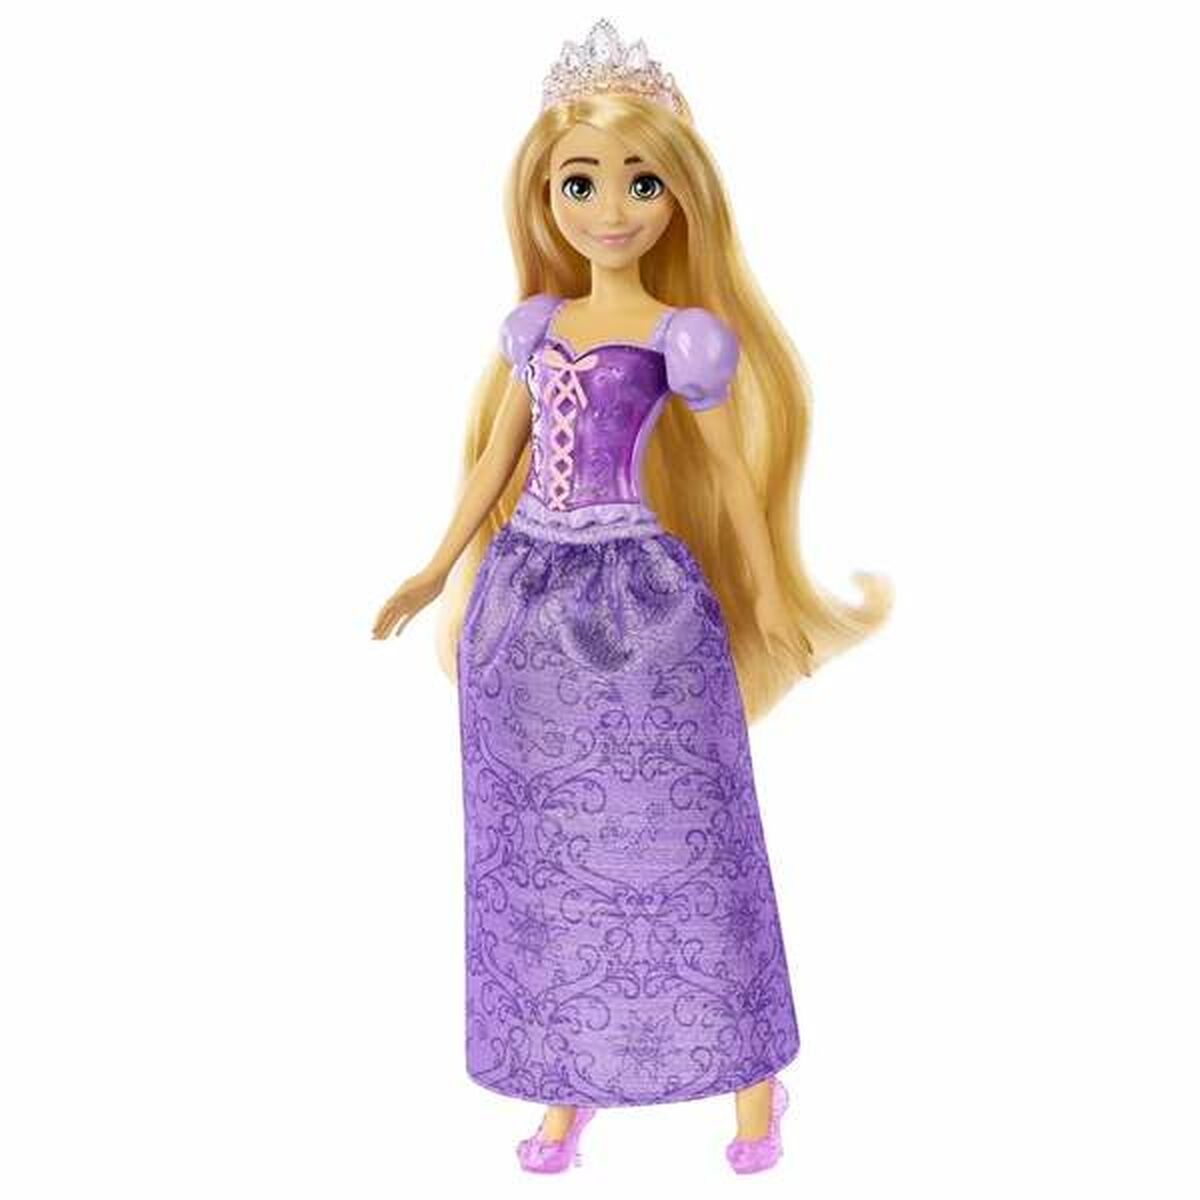 Bambola Princesses Disney Rapunzel Articolata 29 cm - Disponibile in 3-4 giorni lavorativi